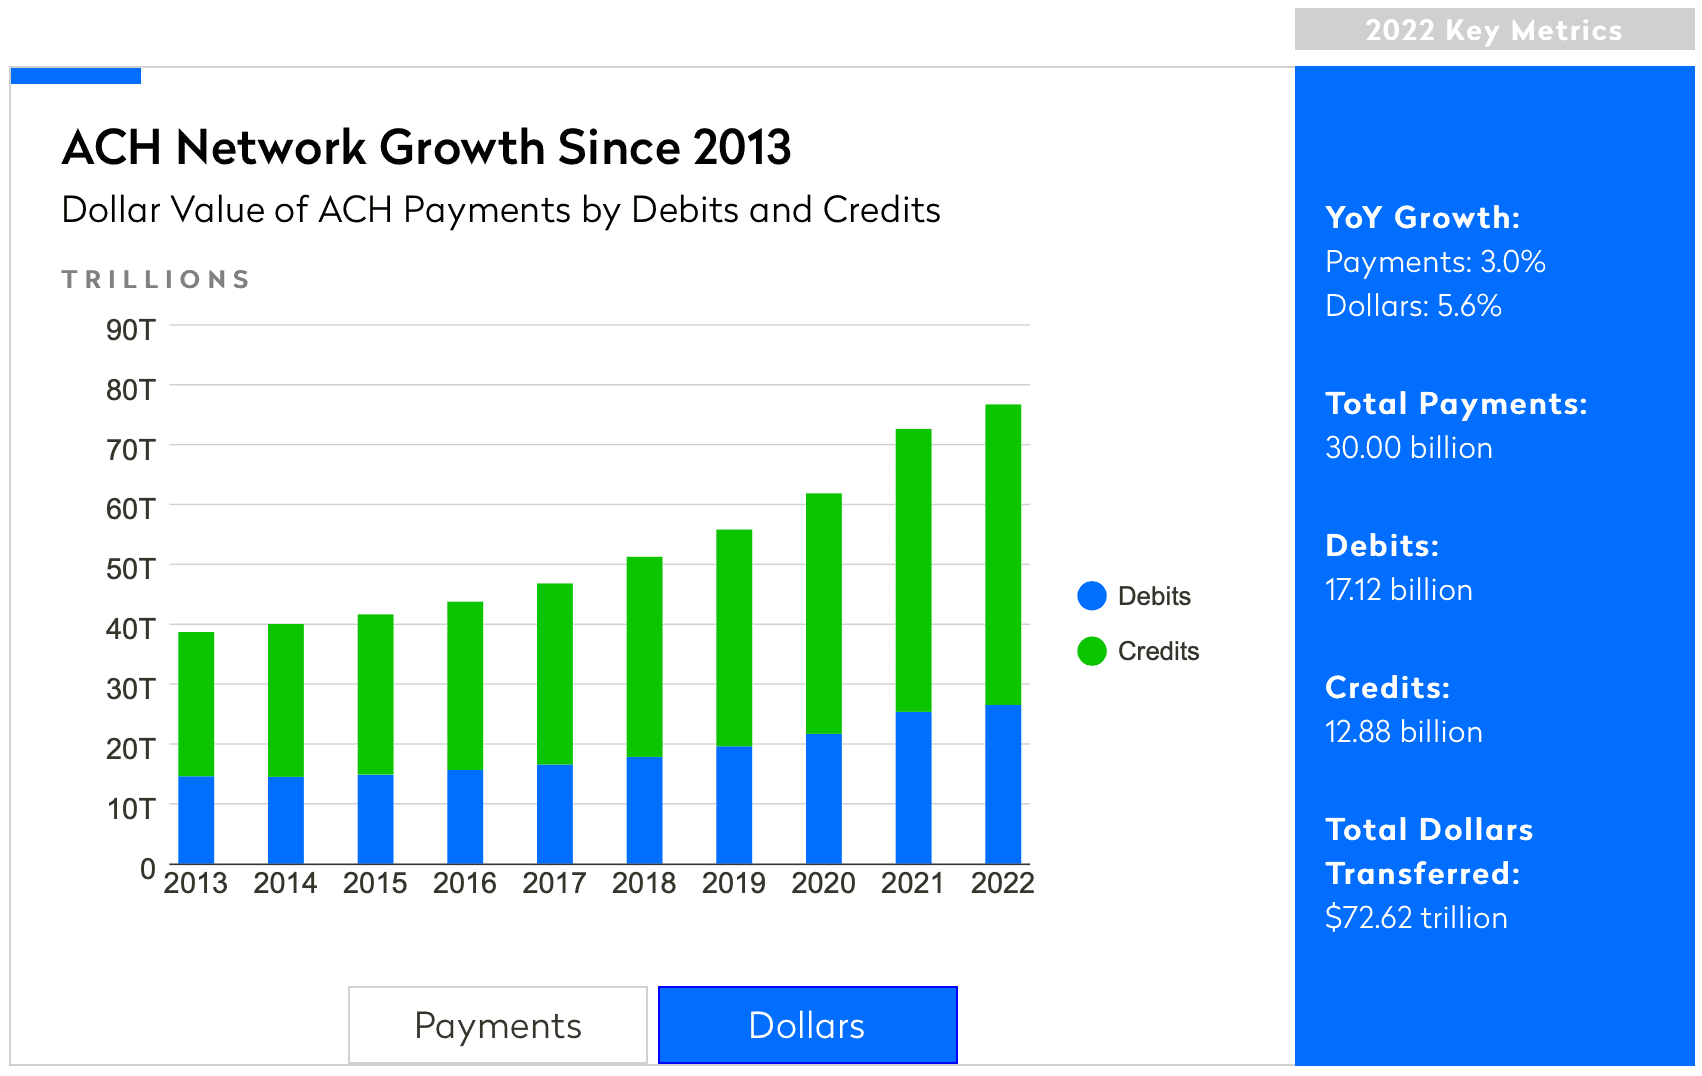 ACH network growth since 2013